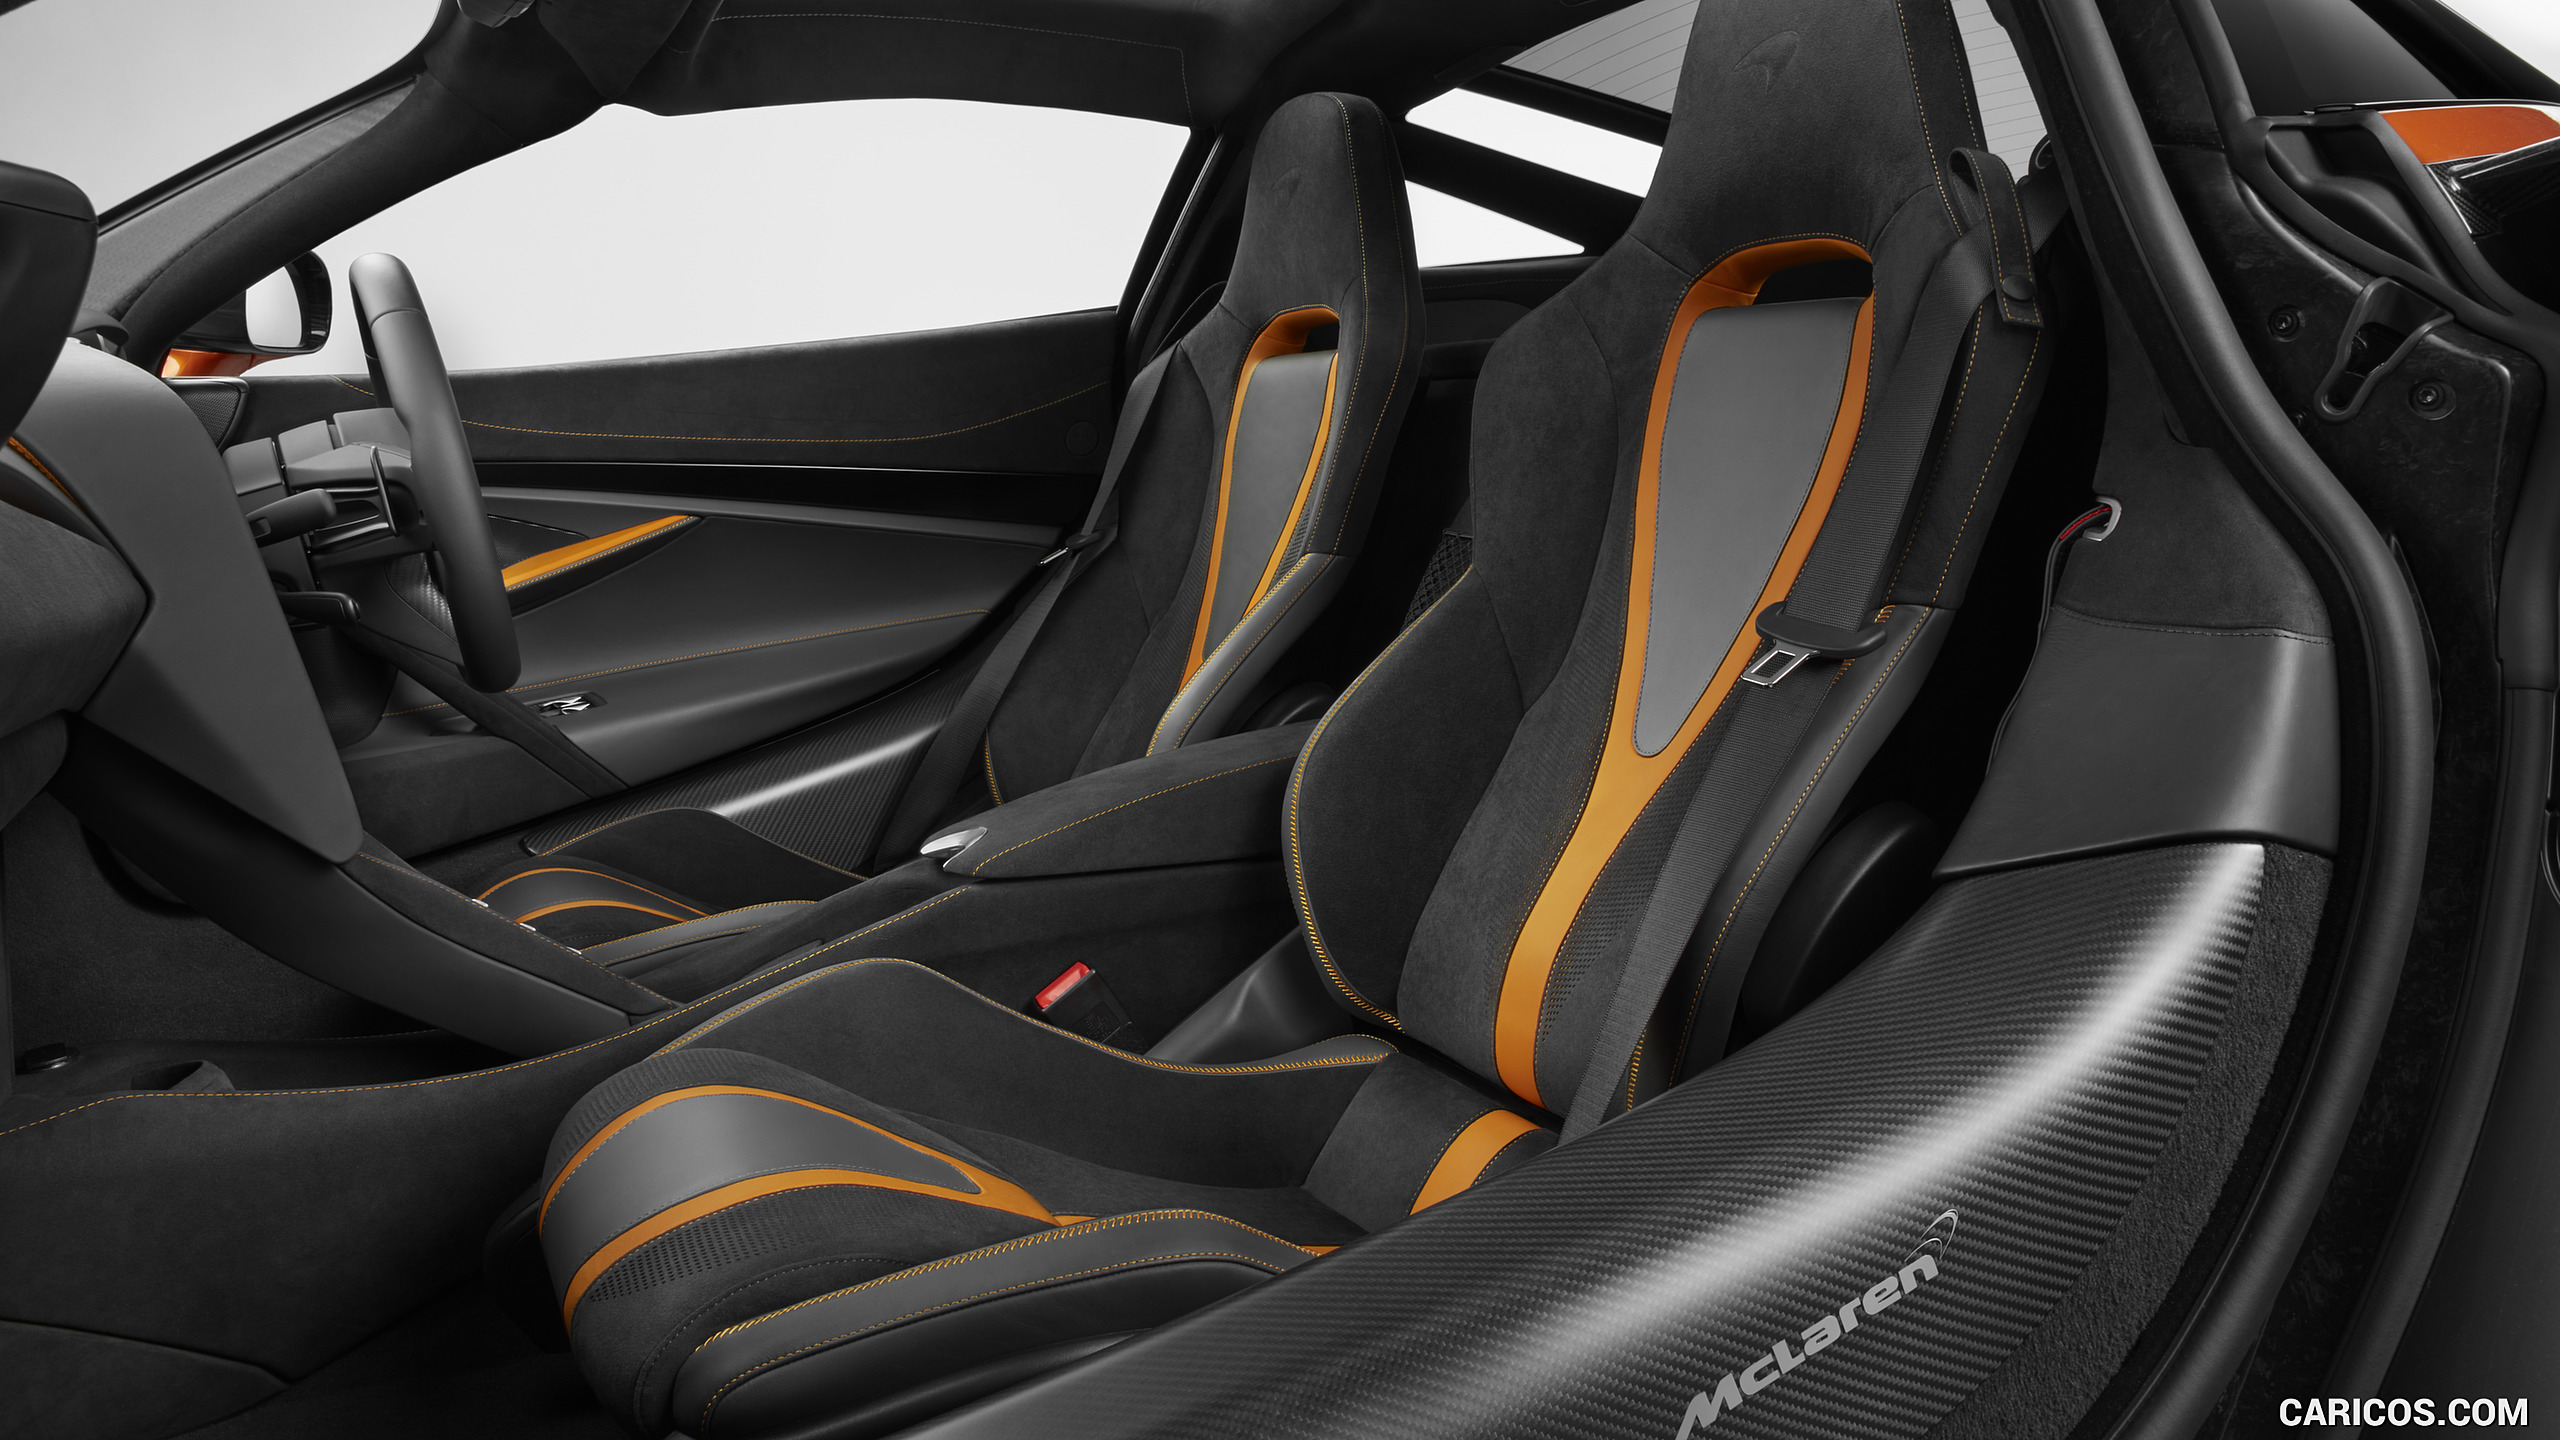 2018 McLaren 720S - Interior, Seats, #13 of 95